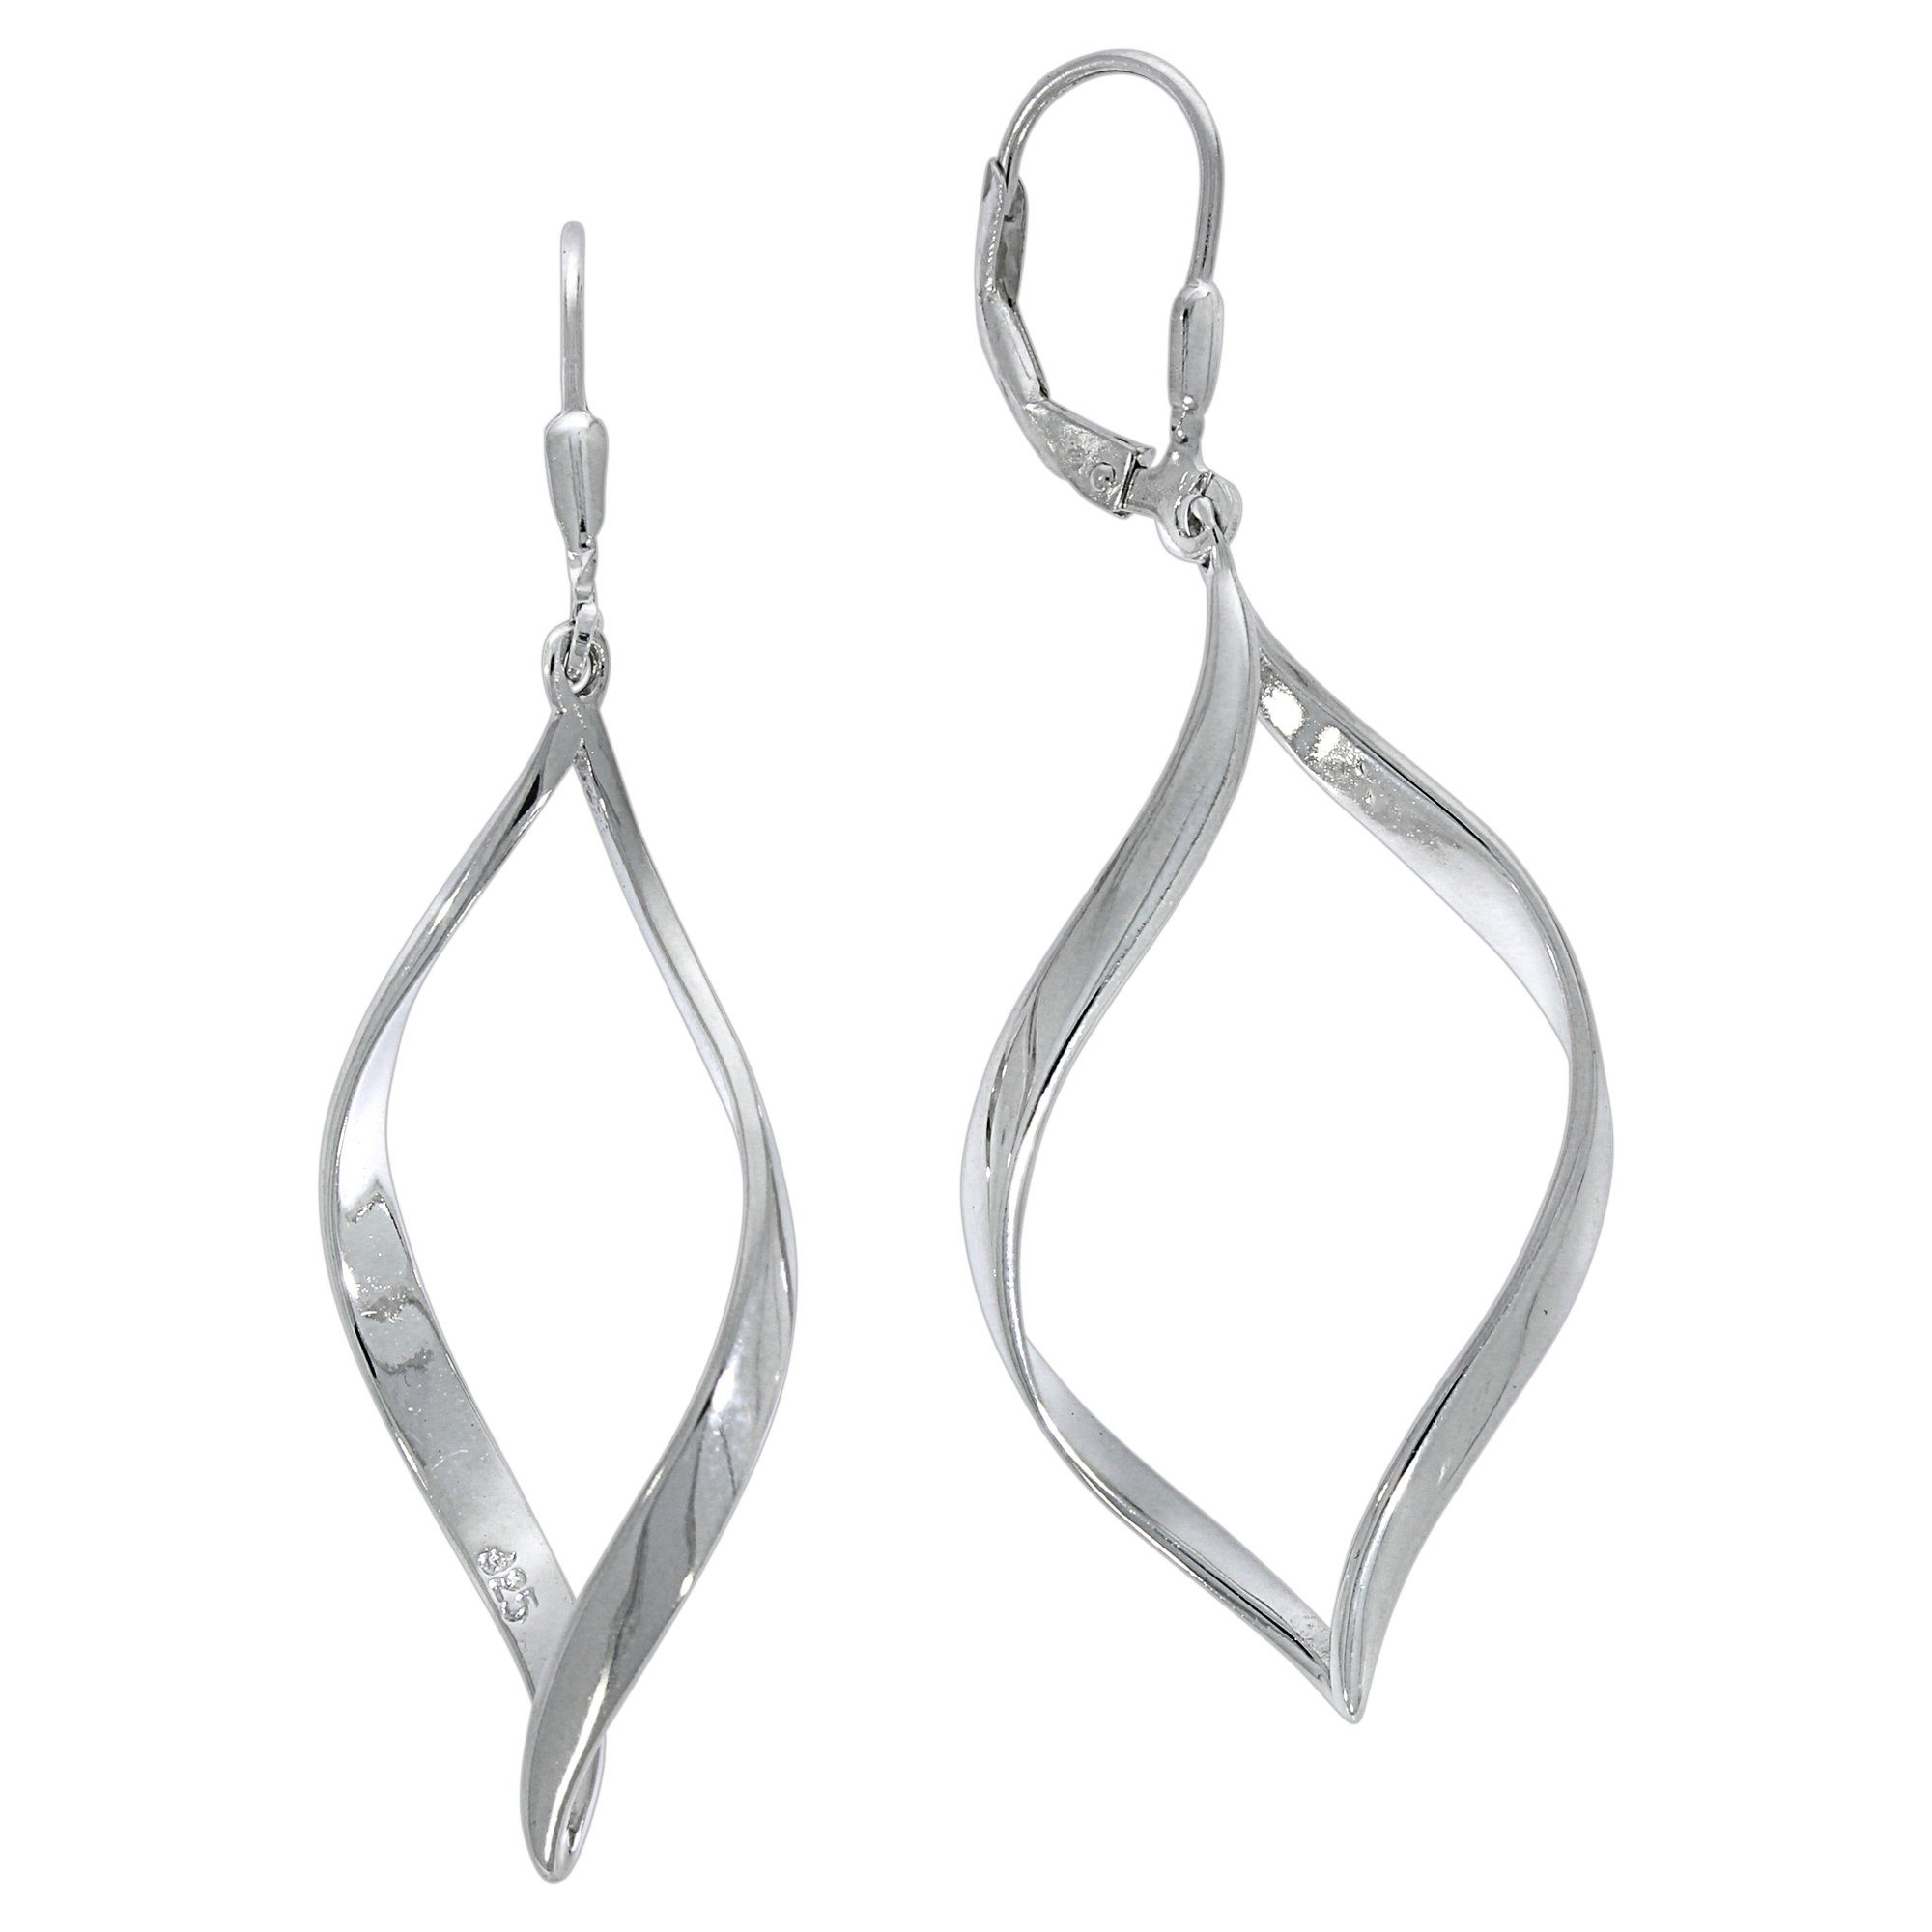 Vivance Paar Ohrhänger 925 Silber rhodiniert, Anlaufgeschützt durch  Rhodinierung des Ohrschmucks